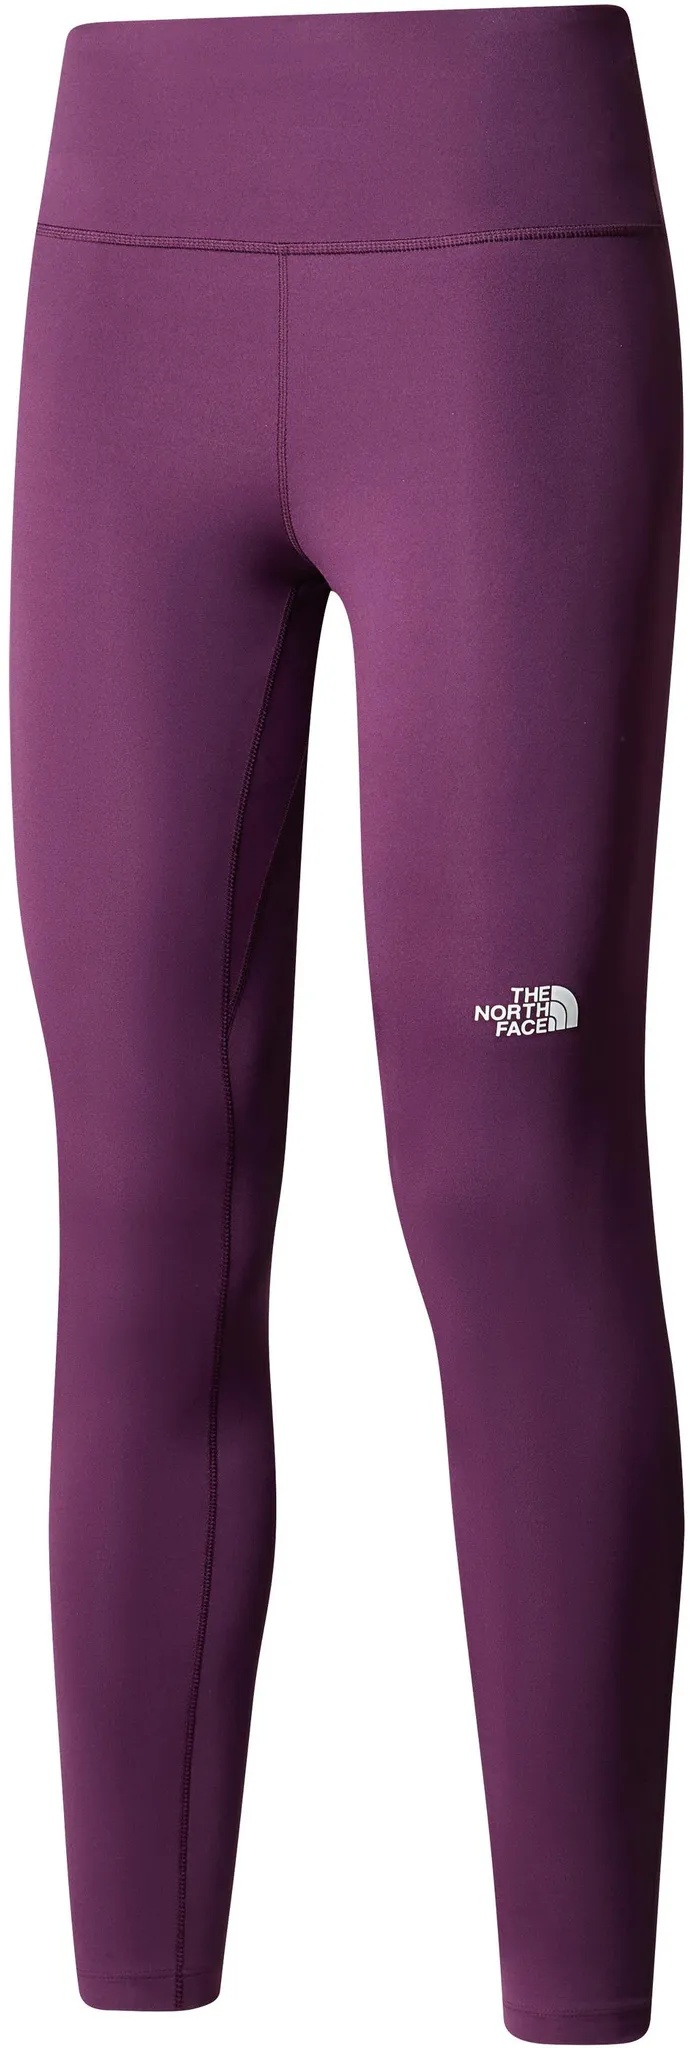 The North Face FLEX Tights Damen in black currant purple, Größe L - lila